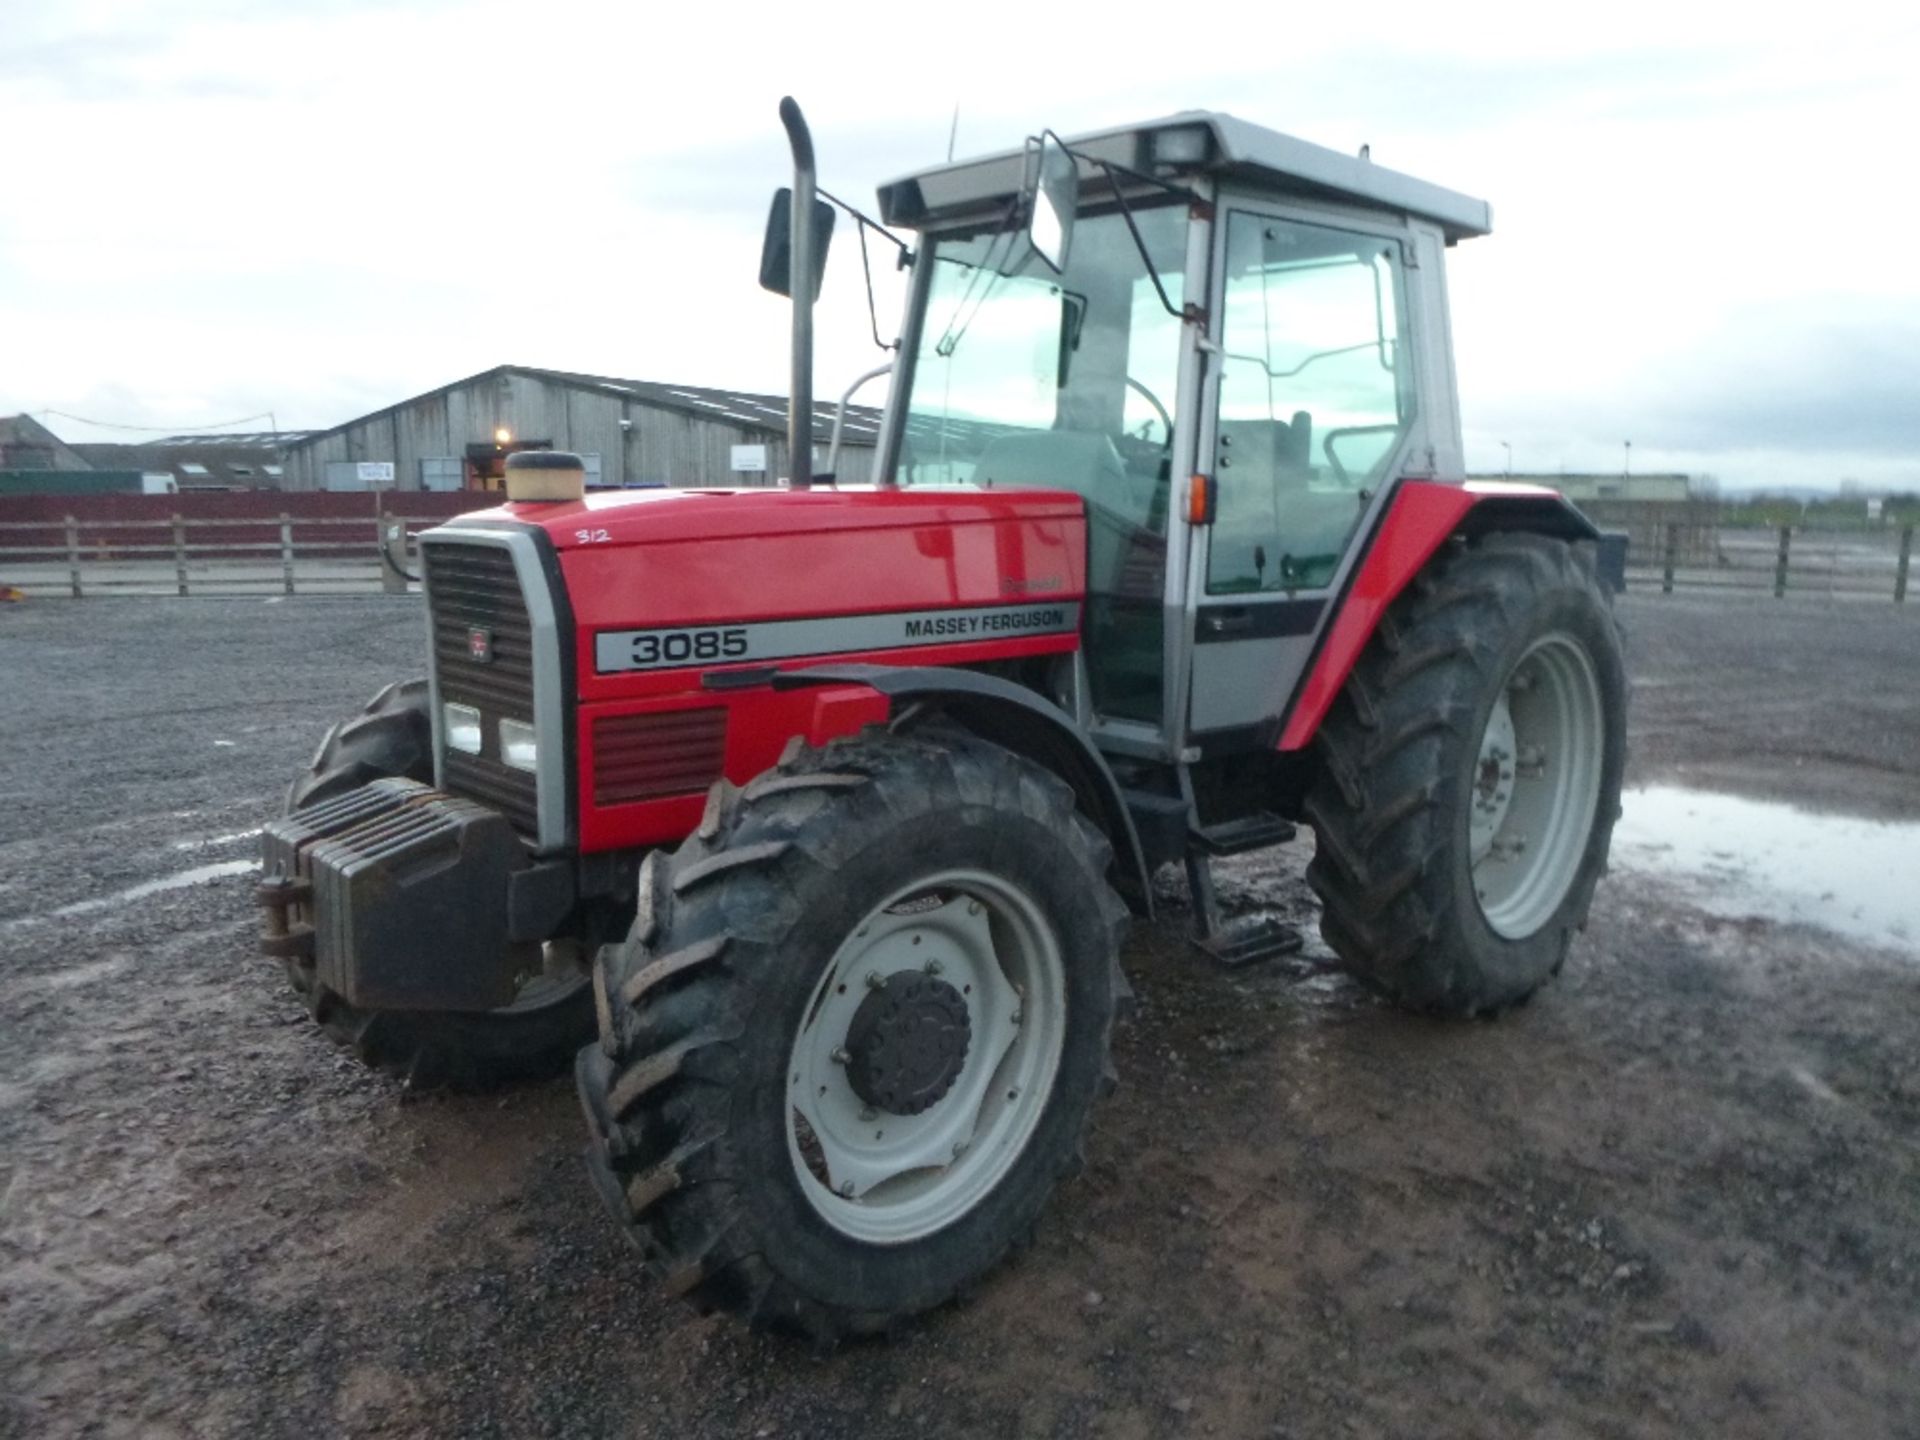 Massey Ferguson 3085 4x4 Dynashift Tractor. 2700 hrs
Date of Reg 16/03/95